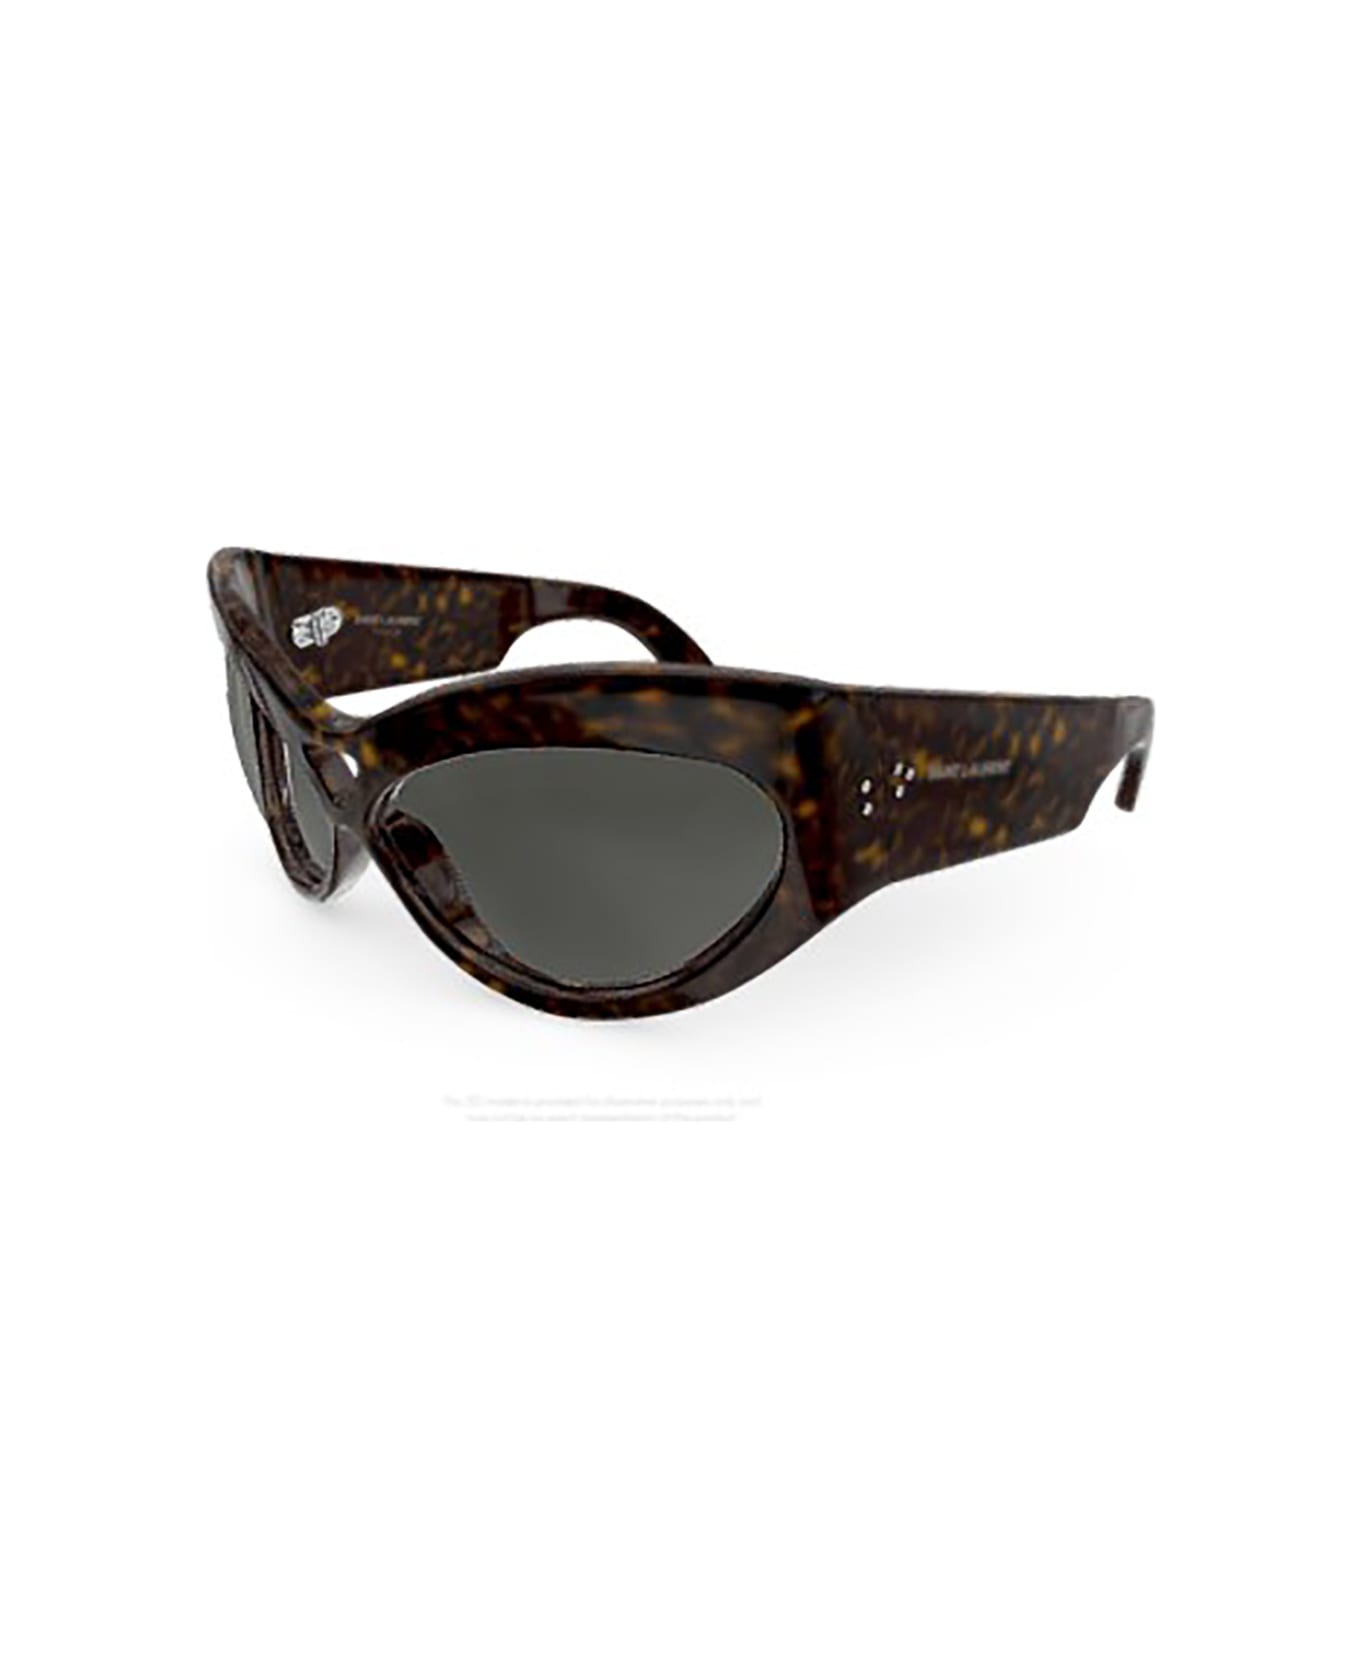 Saint Laurent Eyewear SL 73 Sunglasses - Havana Havana Grey